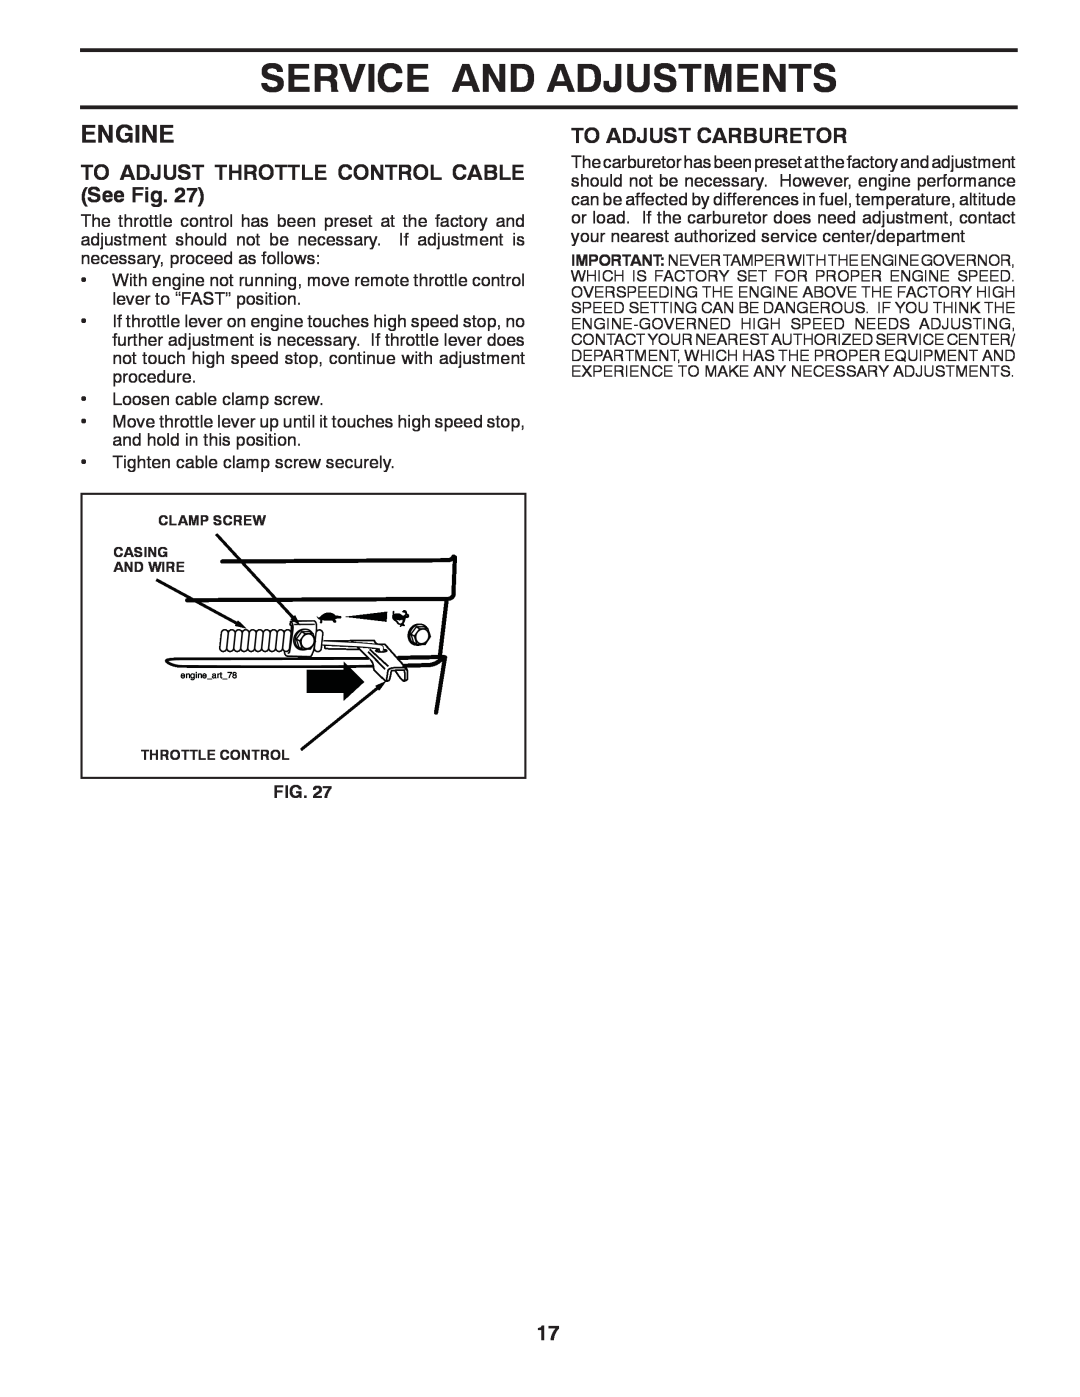 Poulan PRRT875X manual TO ADJUST THROTTLE CONTROL CABLE See Fig, To Adjust Carburetor, Service And Adjustments, Engine 